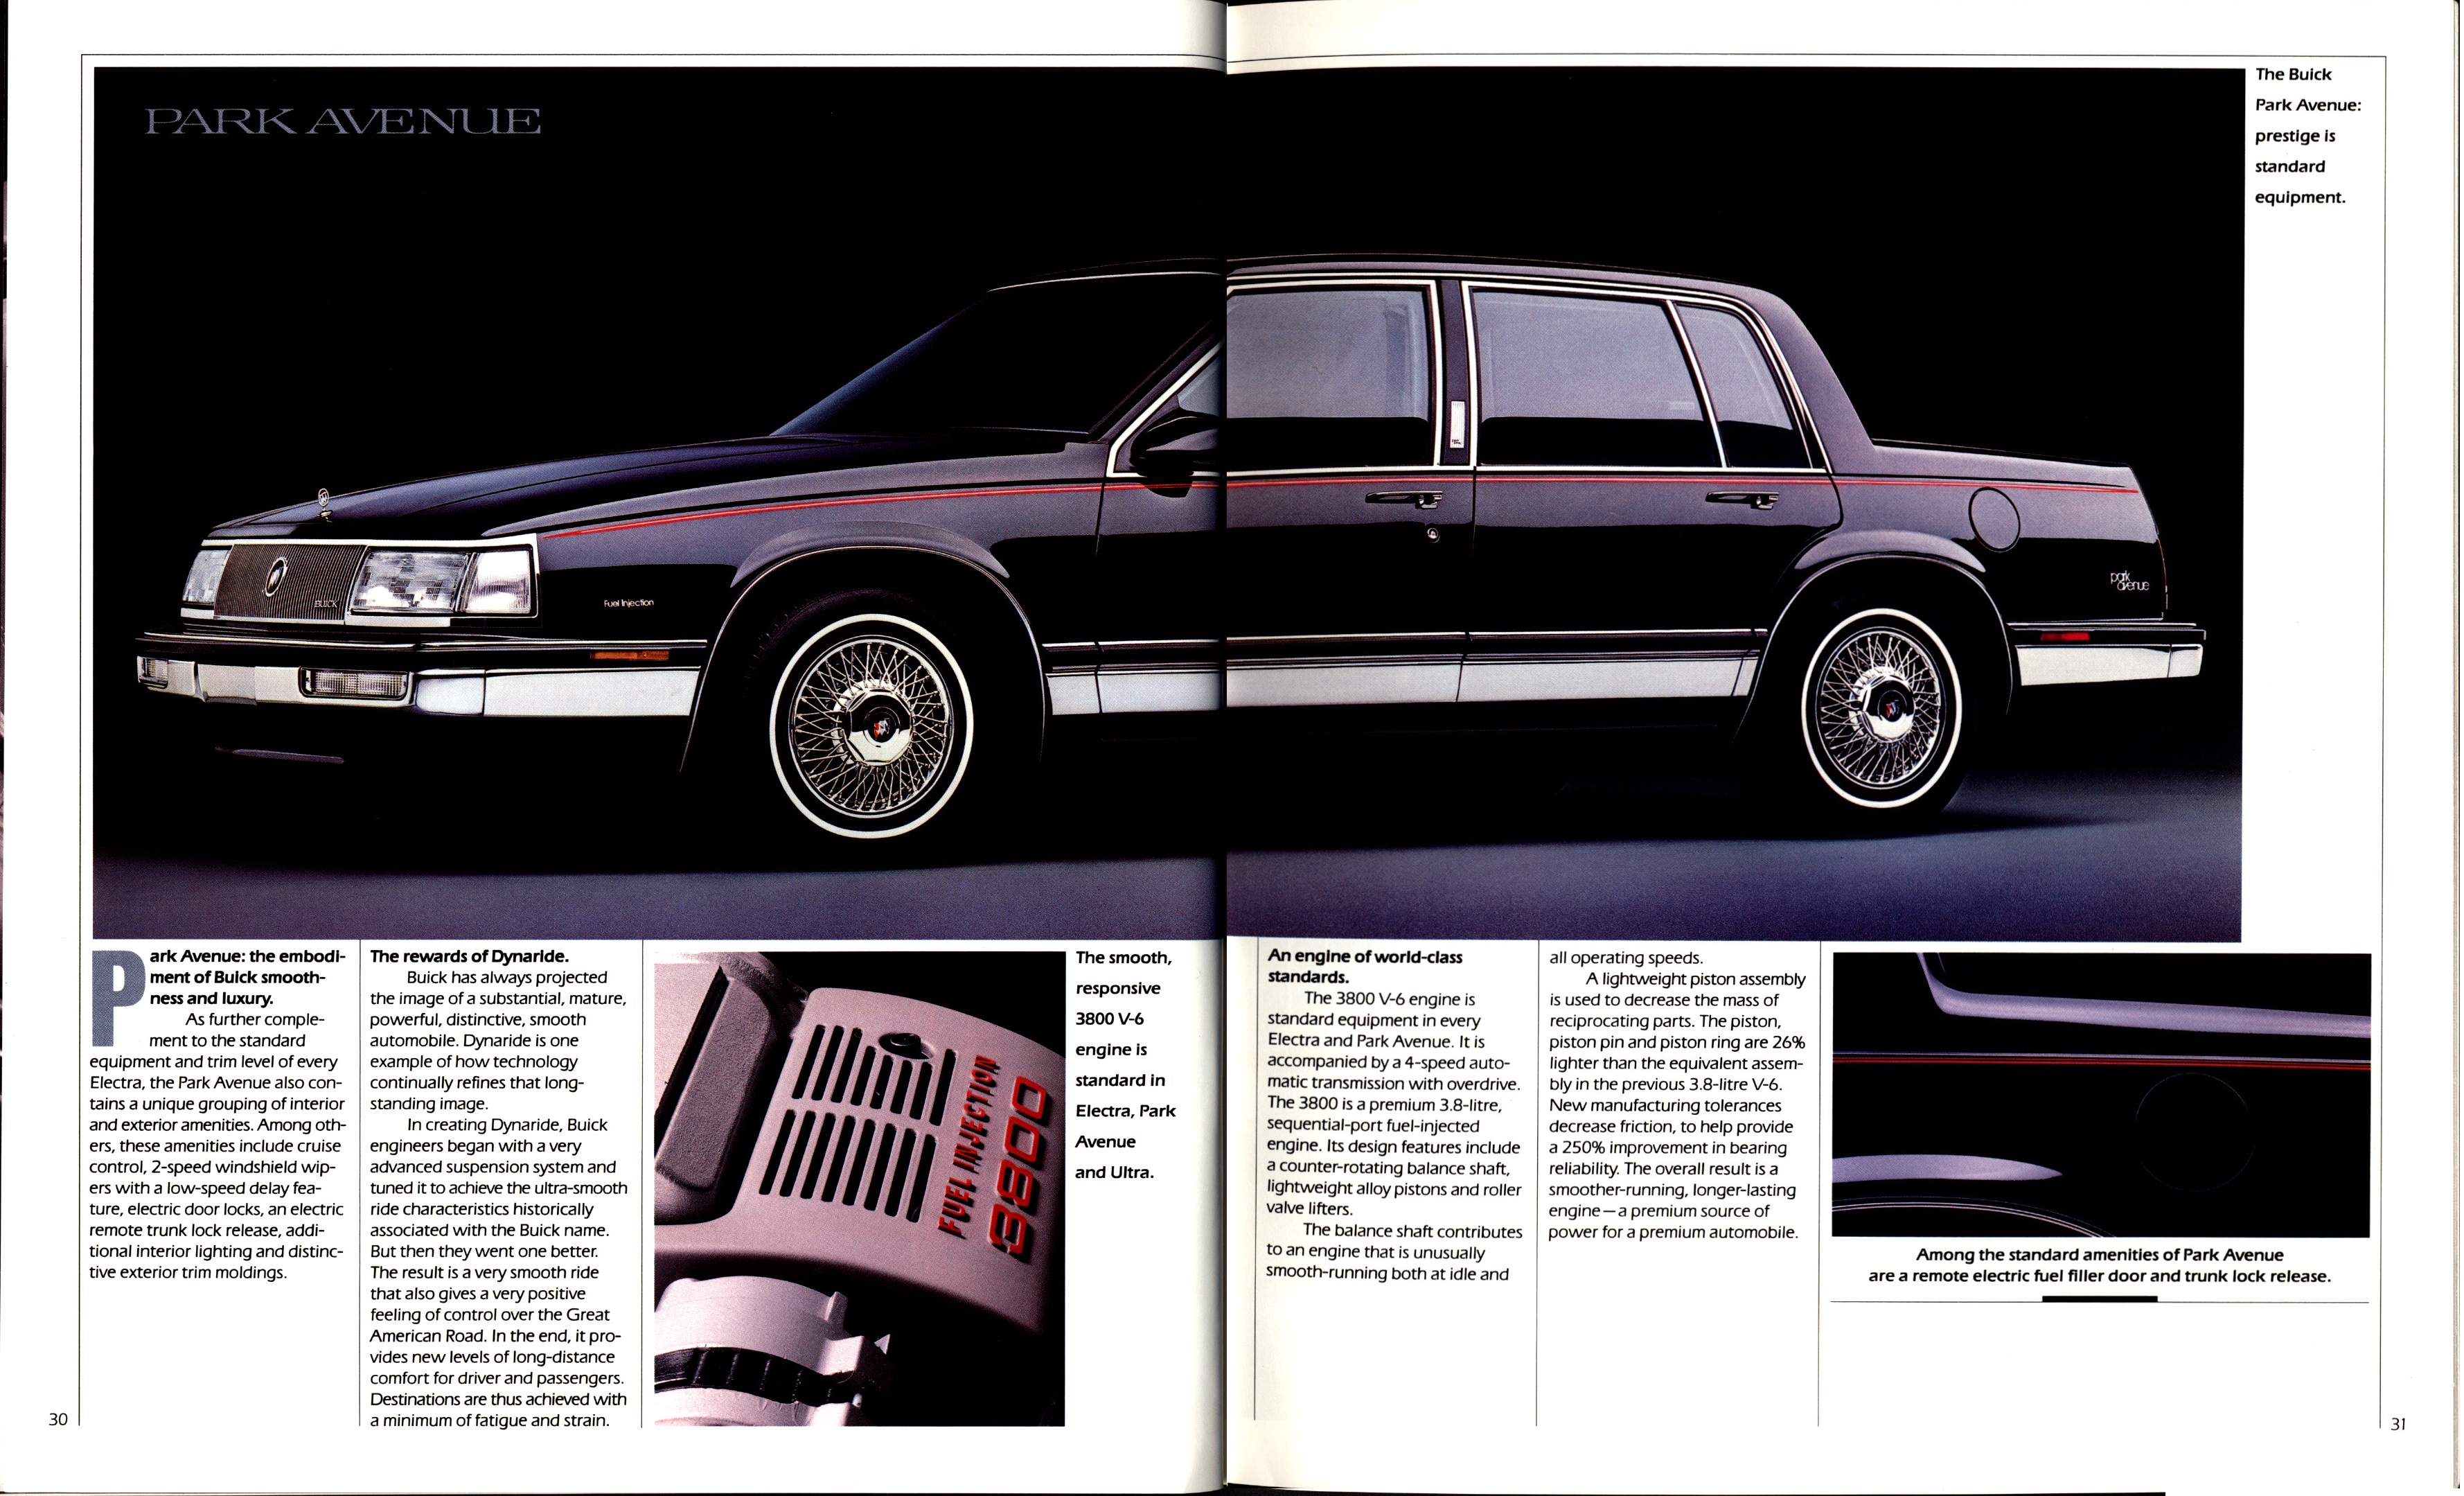 1989 Buick Full Line Prestige Brochure 30-31